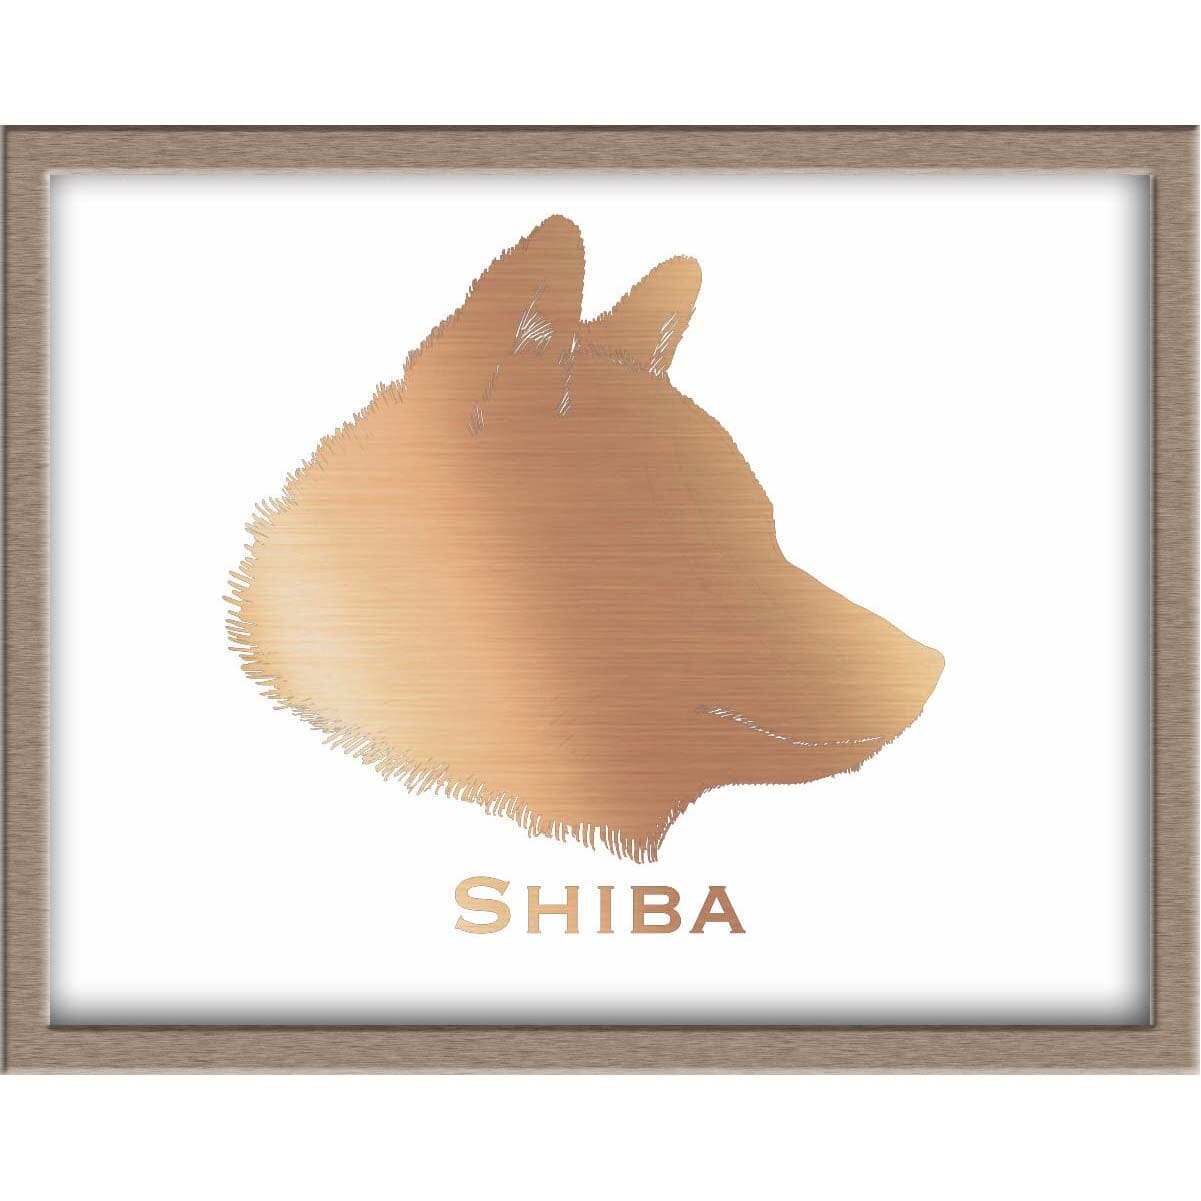 Shiba Inu Silhouette Foiled Print Posters, Prints, & Visual Artwork JoyousJoyfulJoyness 